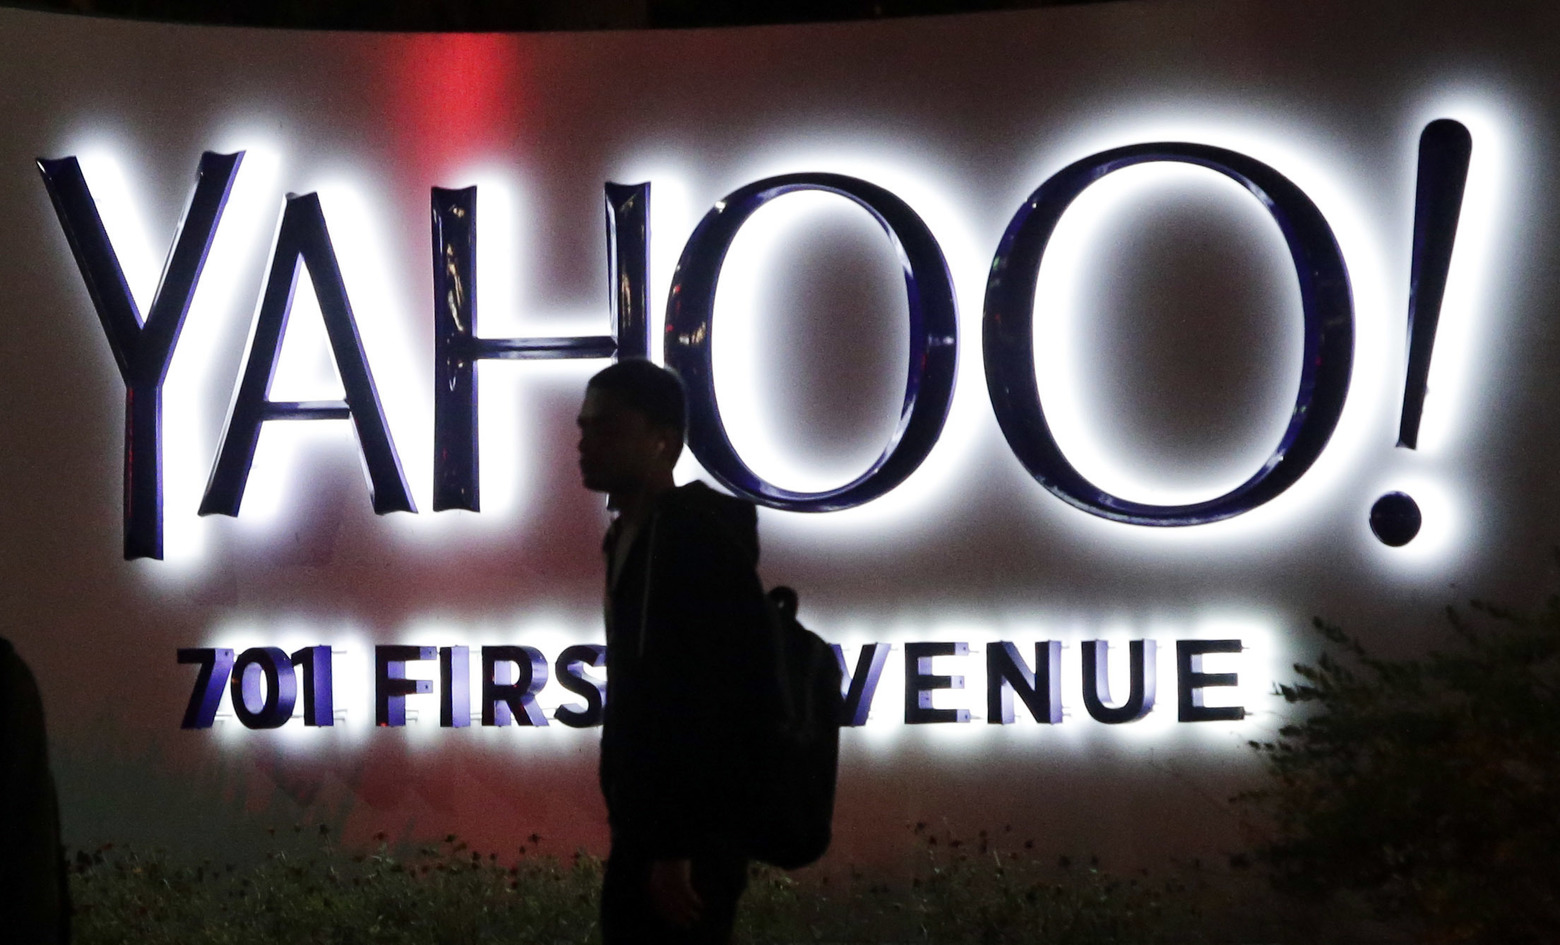 The identity crisis that led to Yahoo's demise